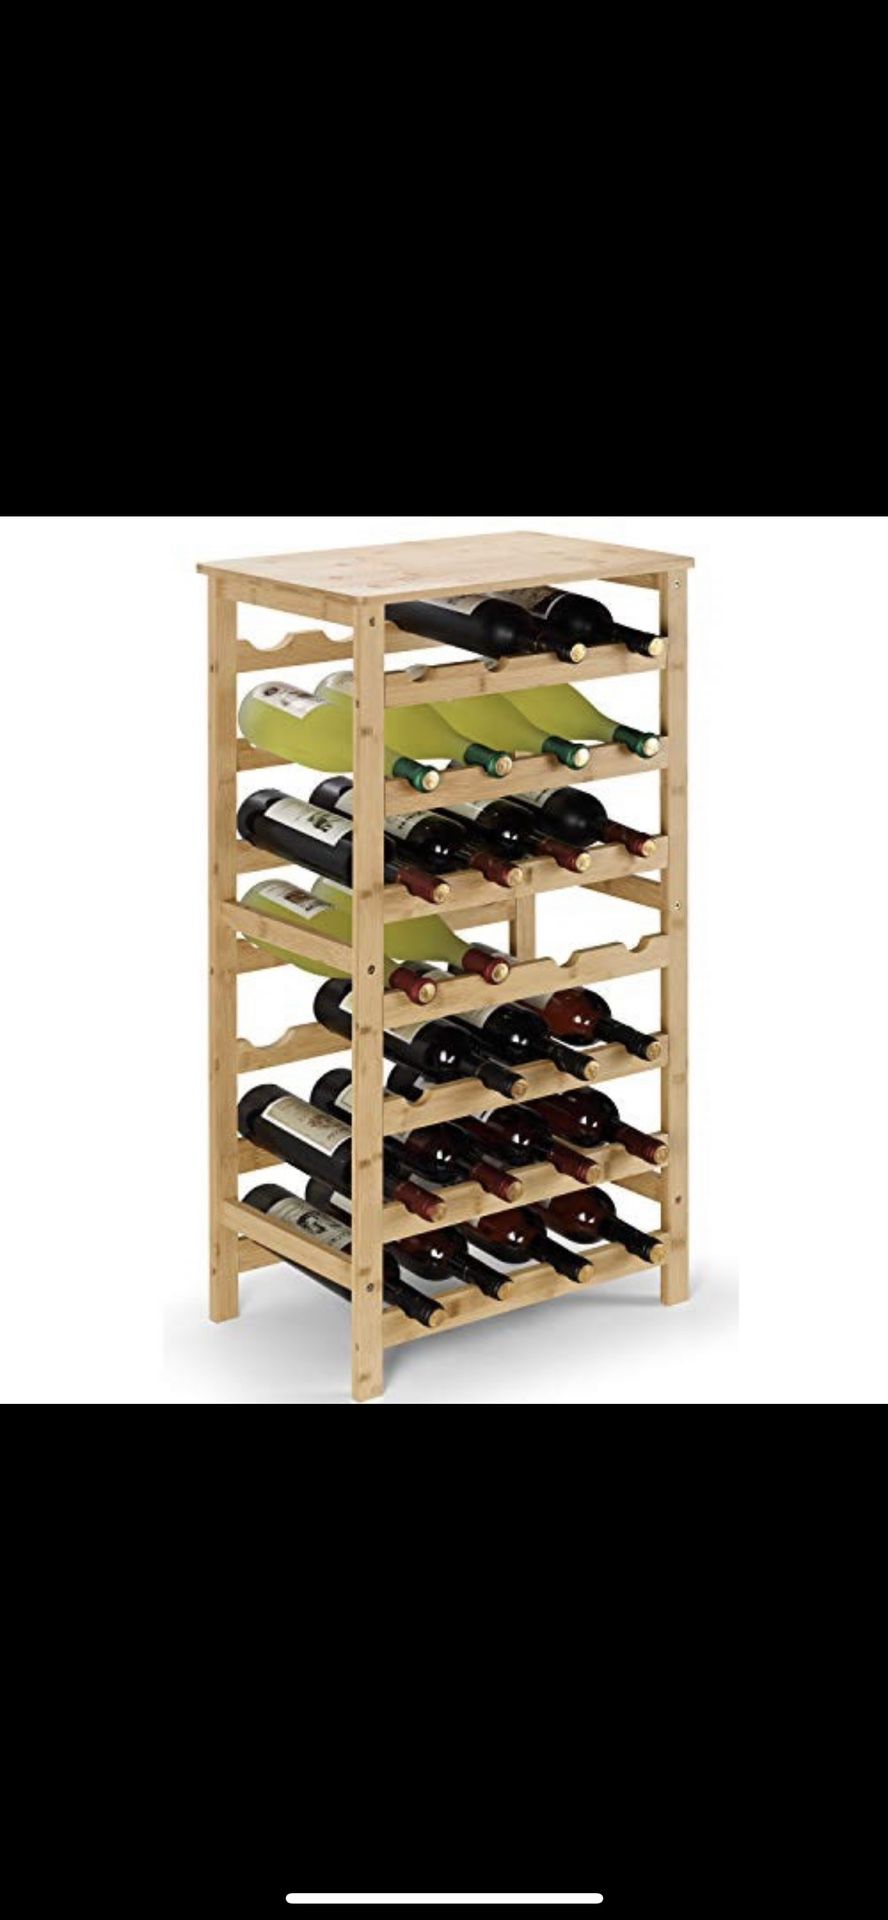 Bamboo Wine Rack Freestanding Wine Storage Shelf Display Stand Perfect